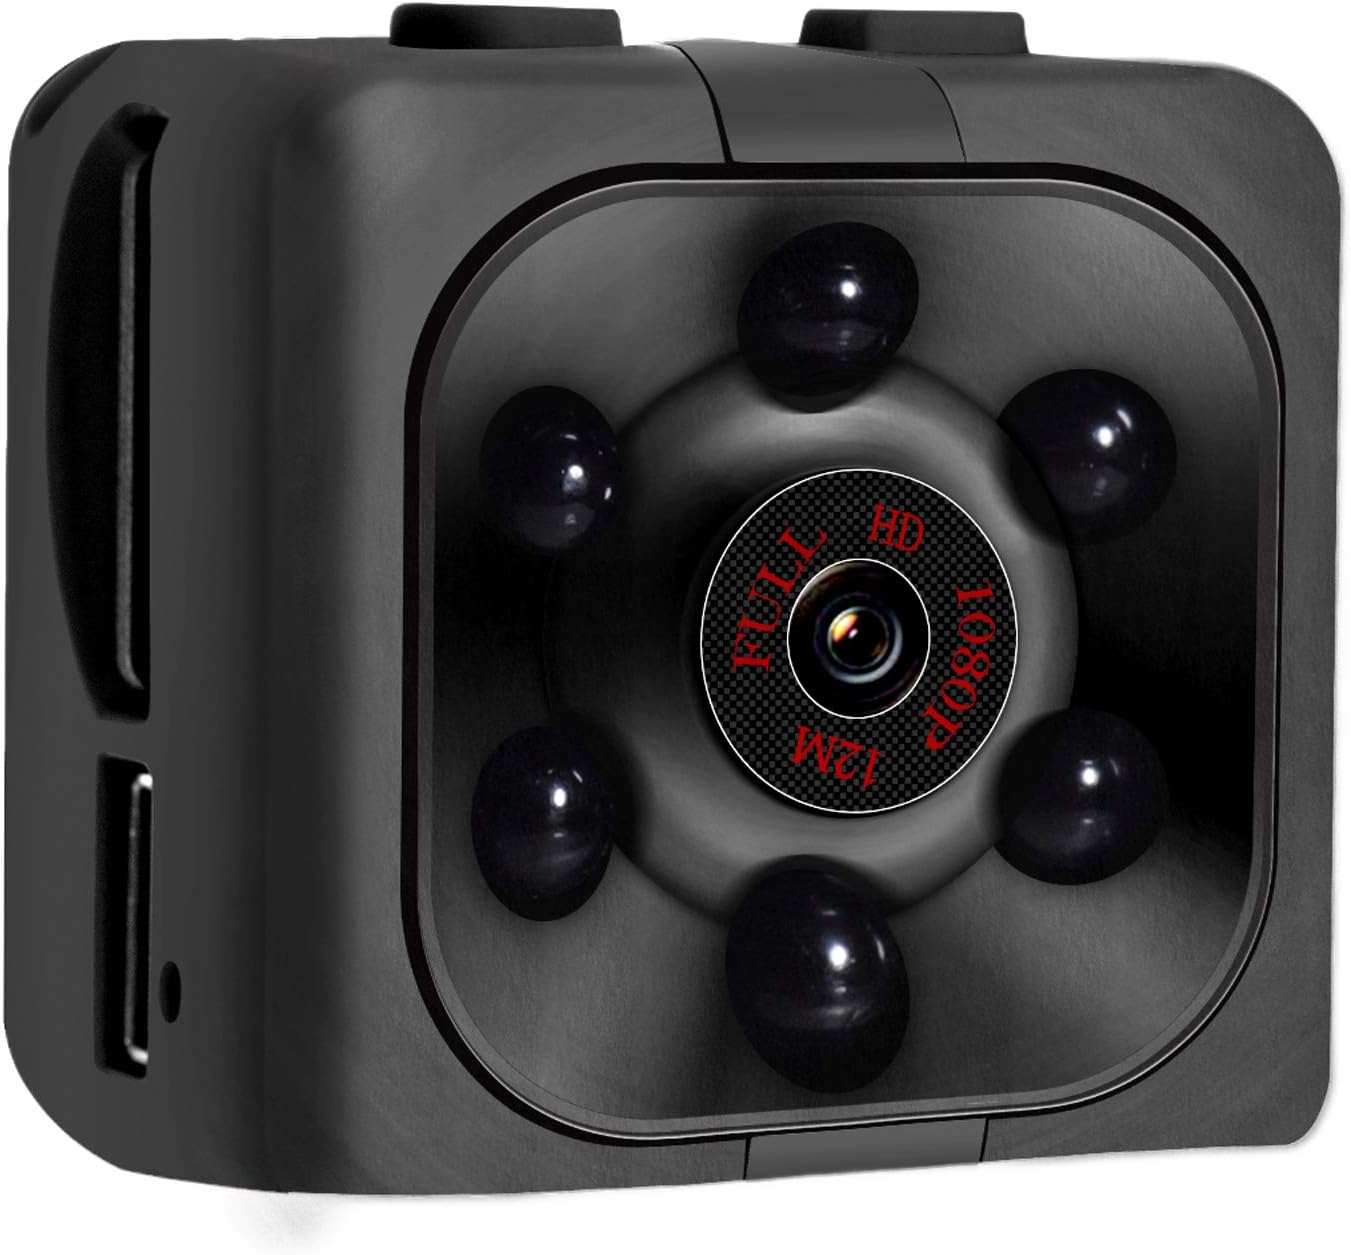 SISFUNG.INC Mini Spy Camera, 1080P HD Mini Spy Camera with Audio and Video Recording, Night Vision, Motion Detective - No Wi-Fi Need